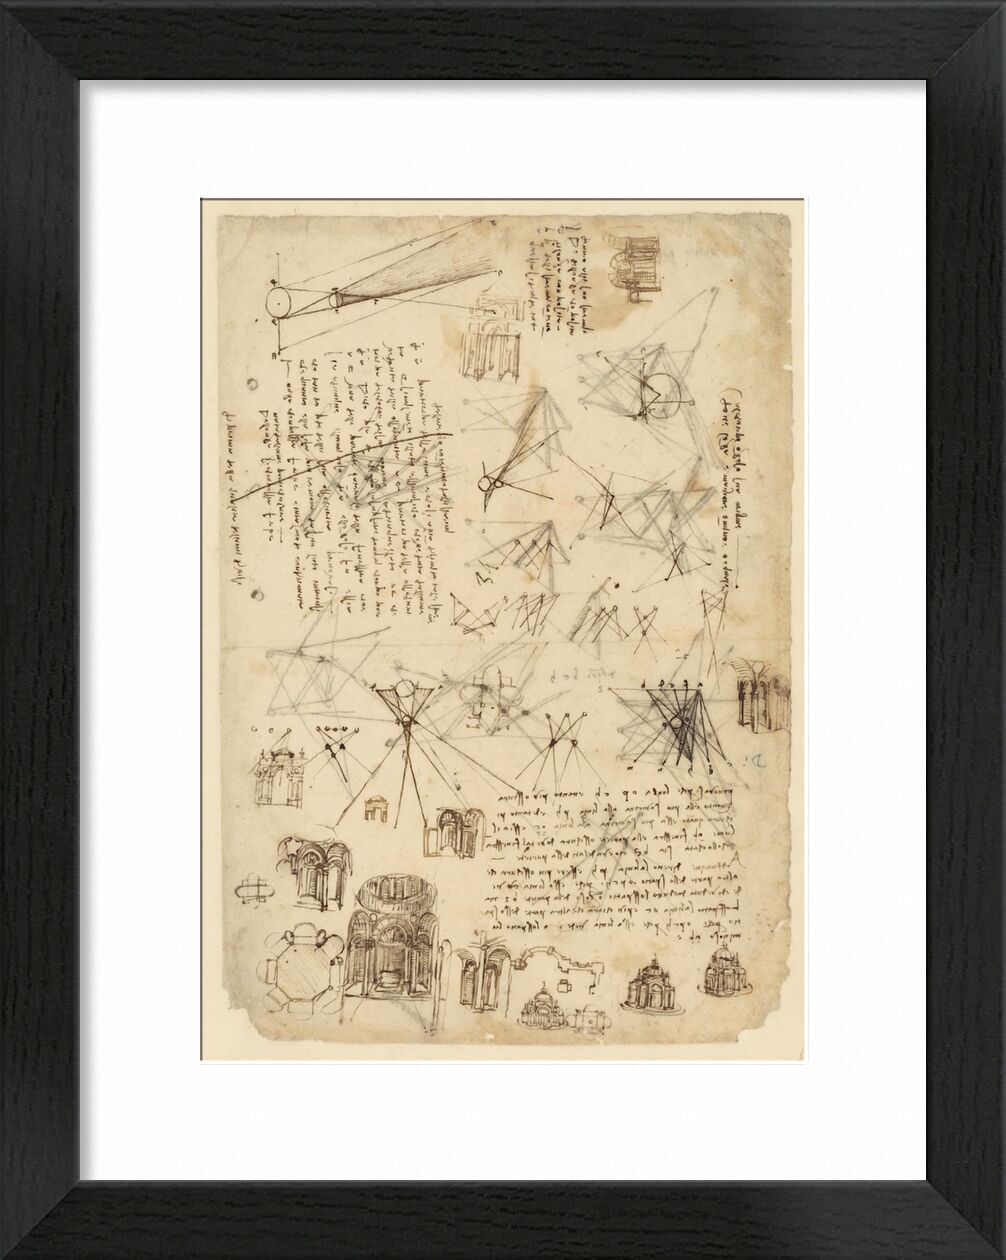 Atlantic codex - Leonardo da Vinci von Bildende Kunst, Prodi Art, Diagramm, Zeichnung, Leonard de Vinci